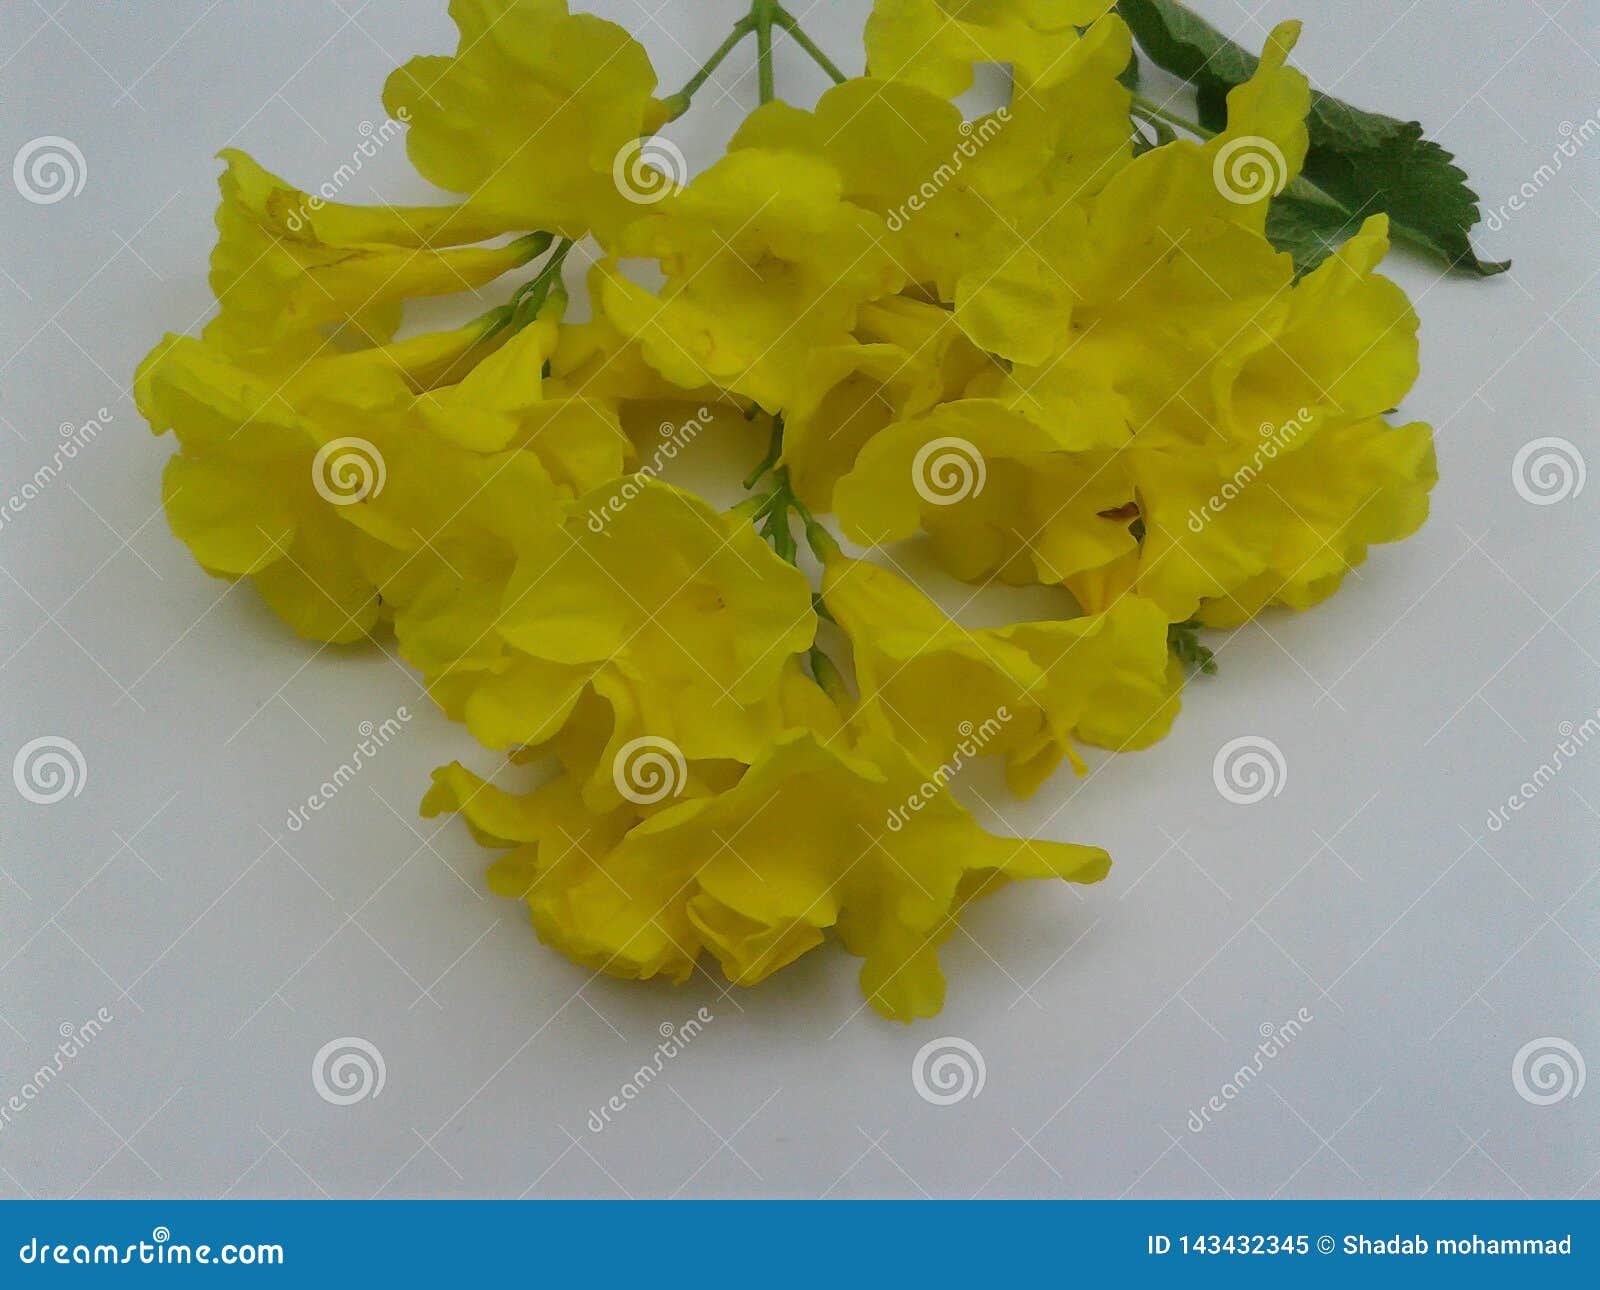 Heart Touching Beautiful Yellow Flower Stock Image - Image of bloom,  decorative: 143432345